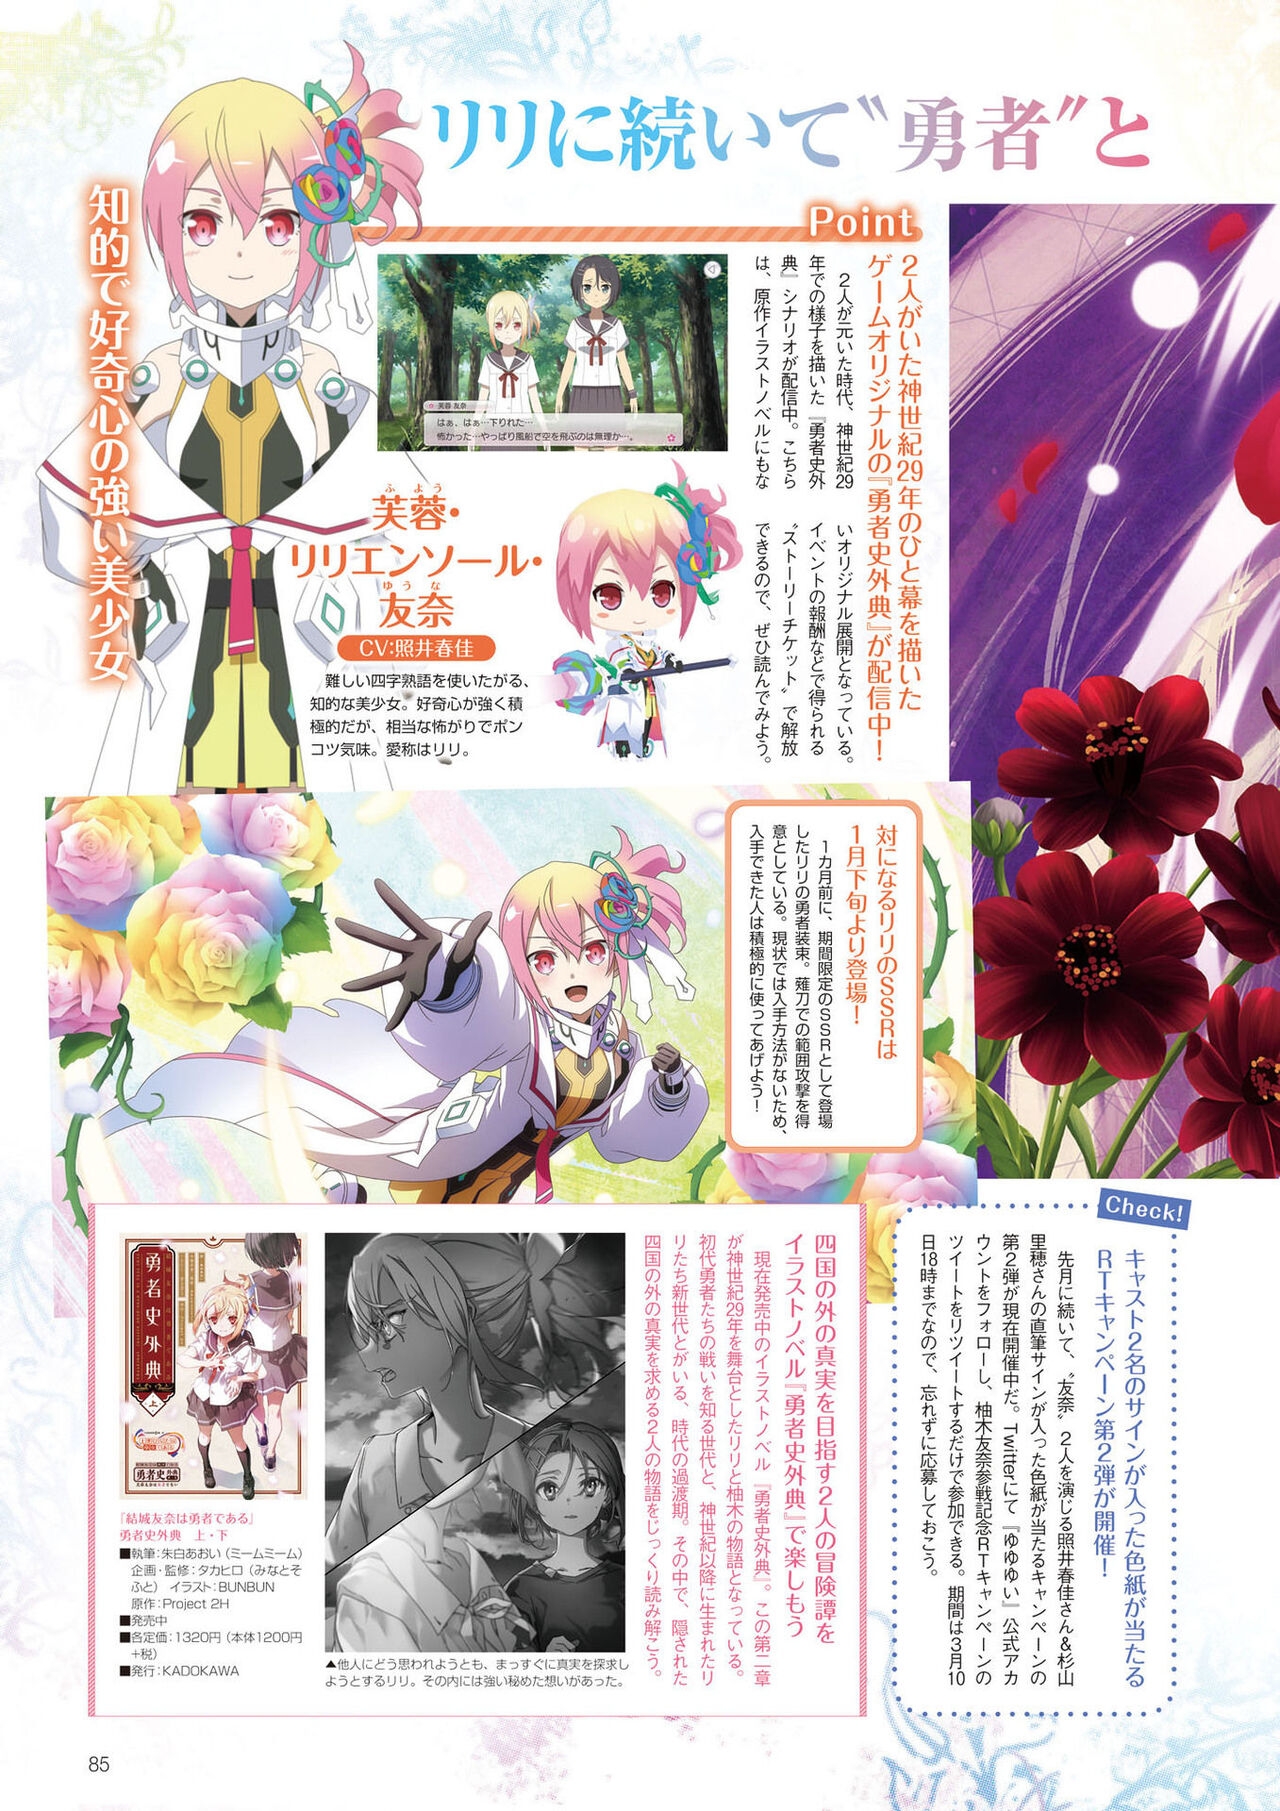 Dengeki G's Magazine #297 - April 2022 82